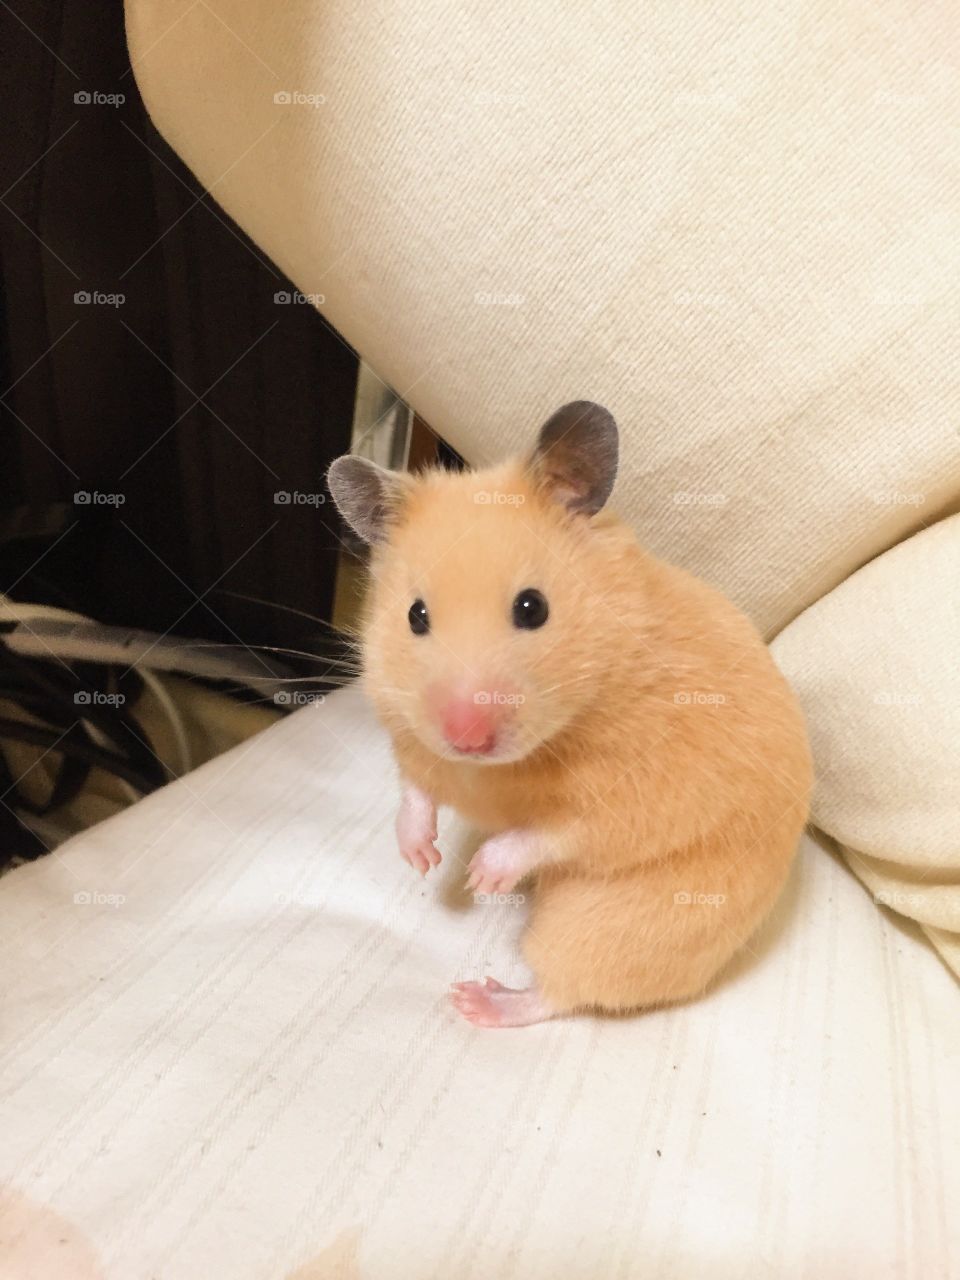 "Miñimiñi bebé" my little hamster 